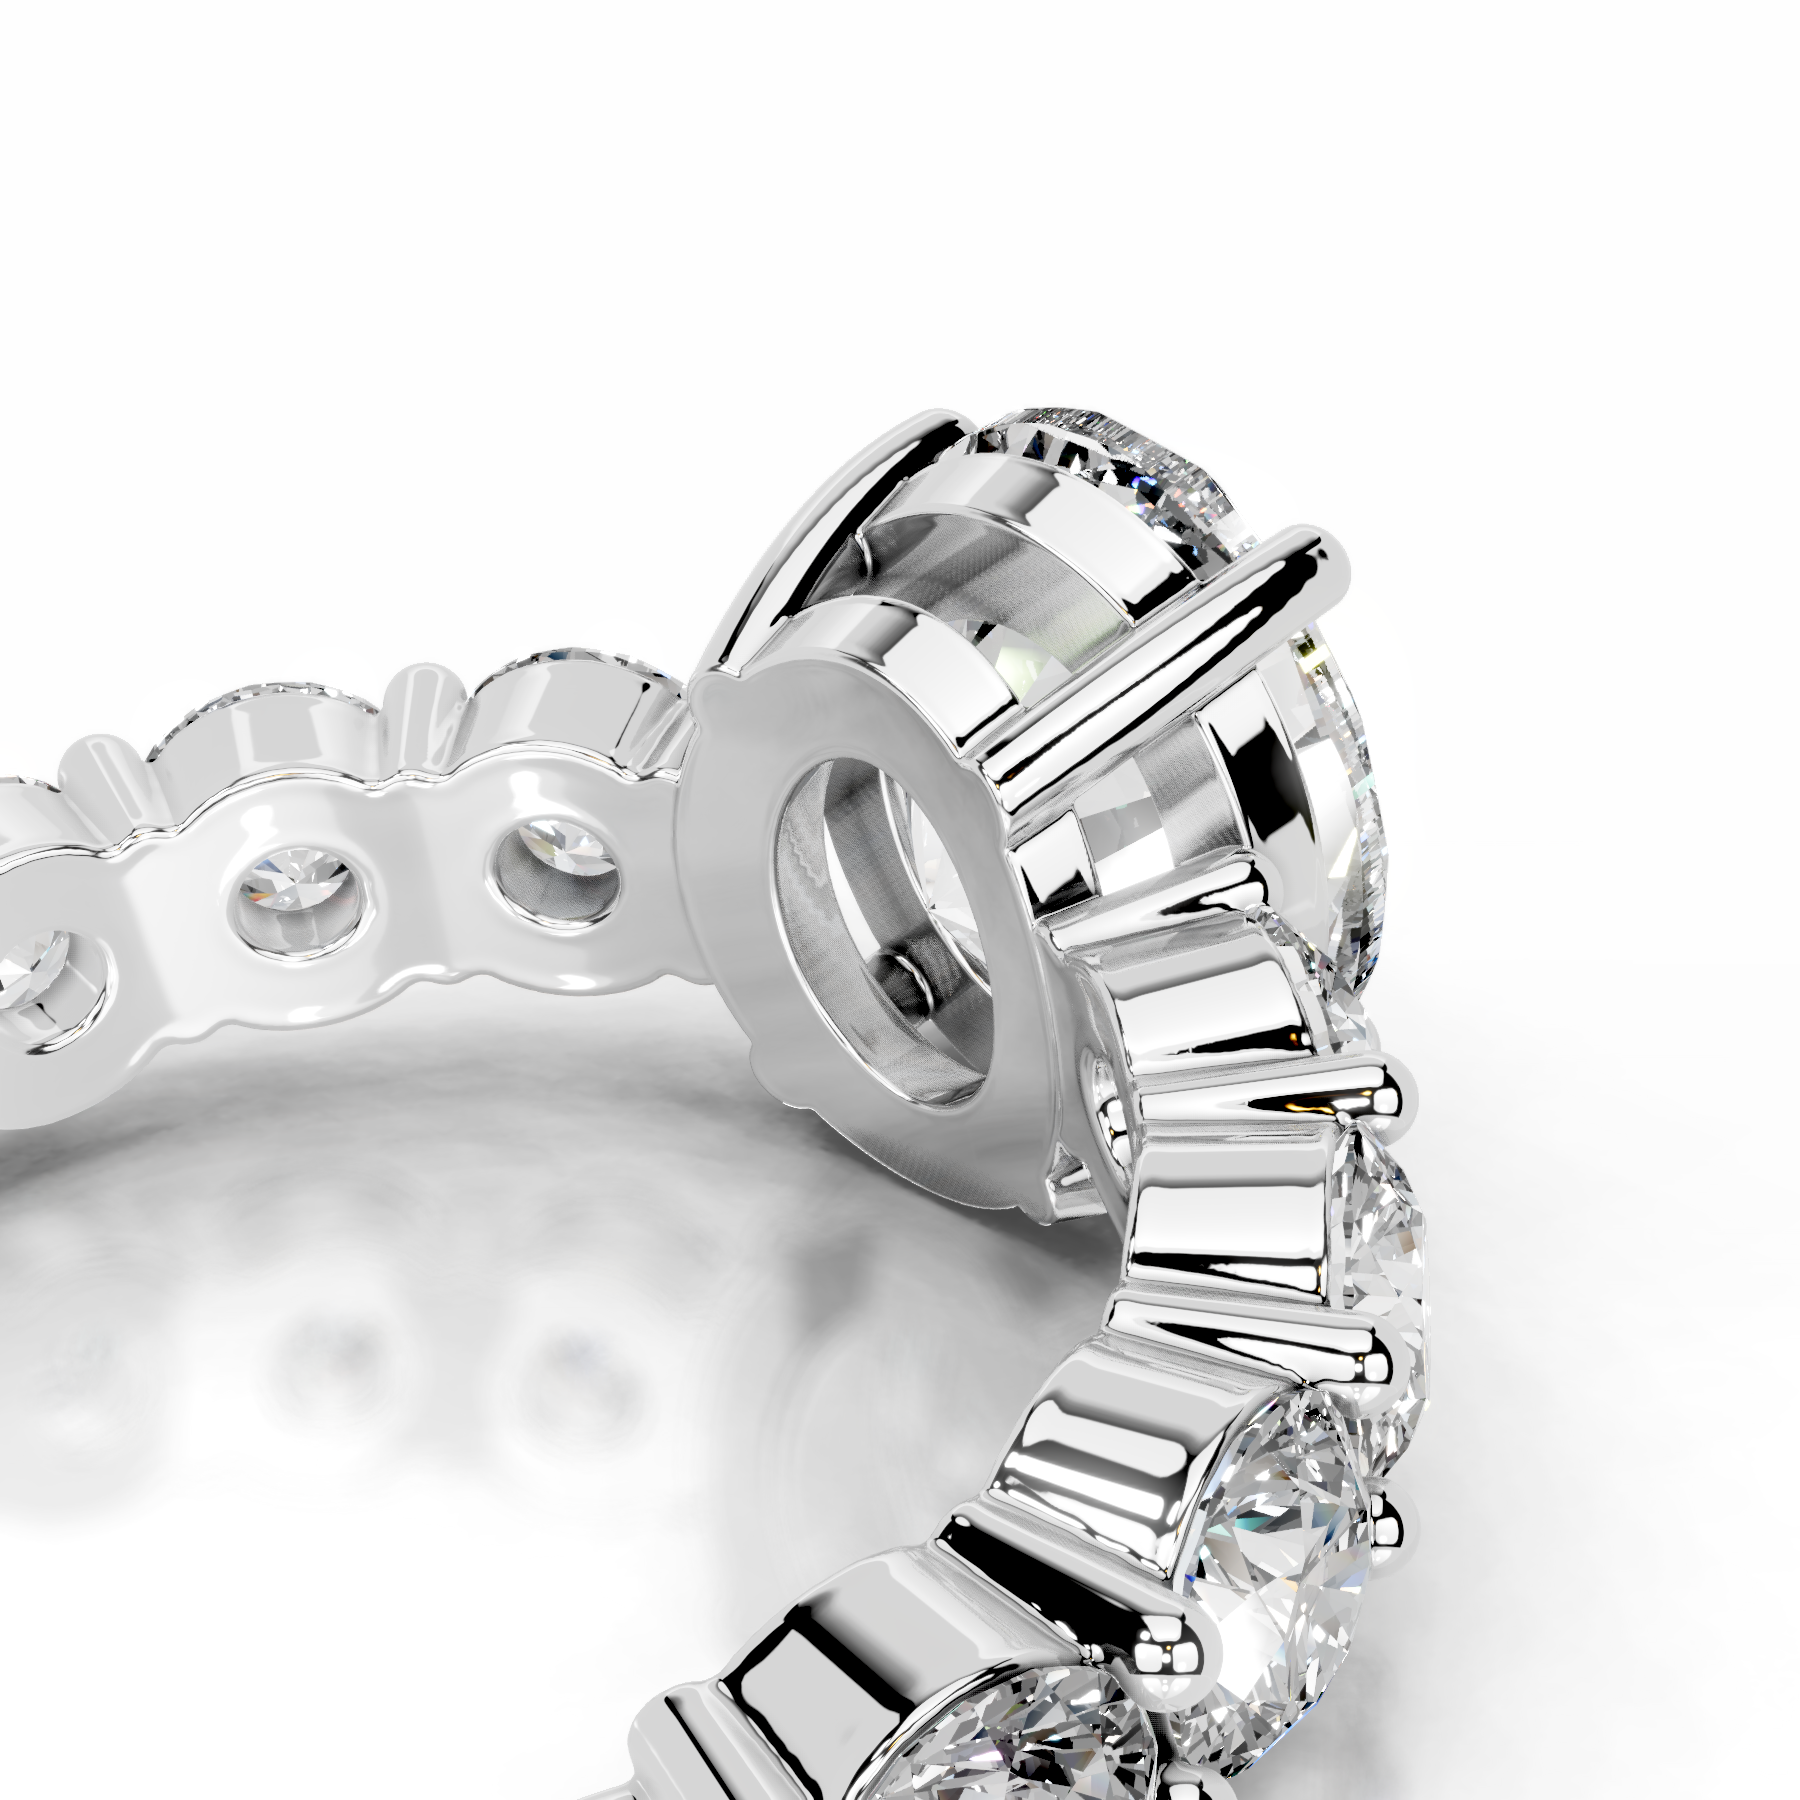 Odin Diamond Engagement Ring   (4 Carat) -14K White Gold